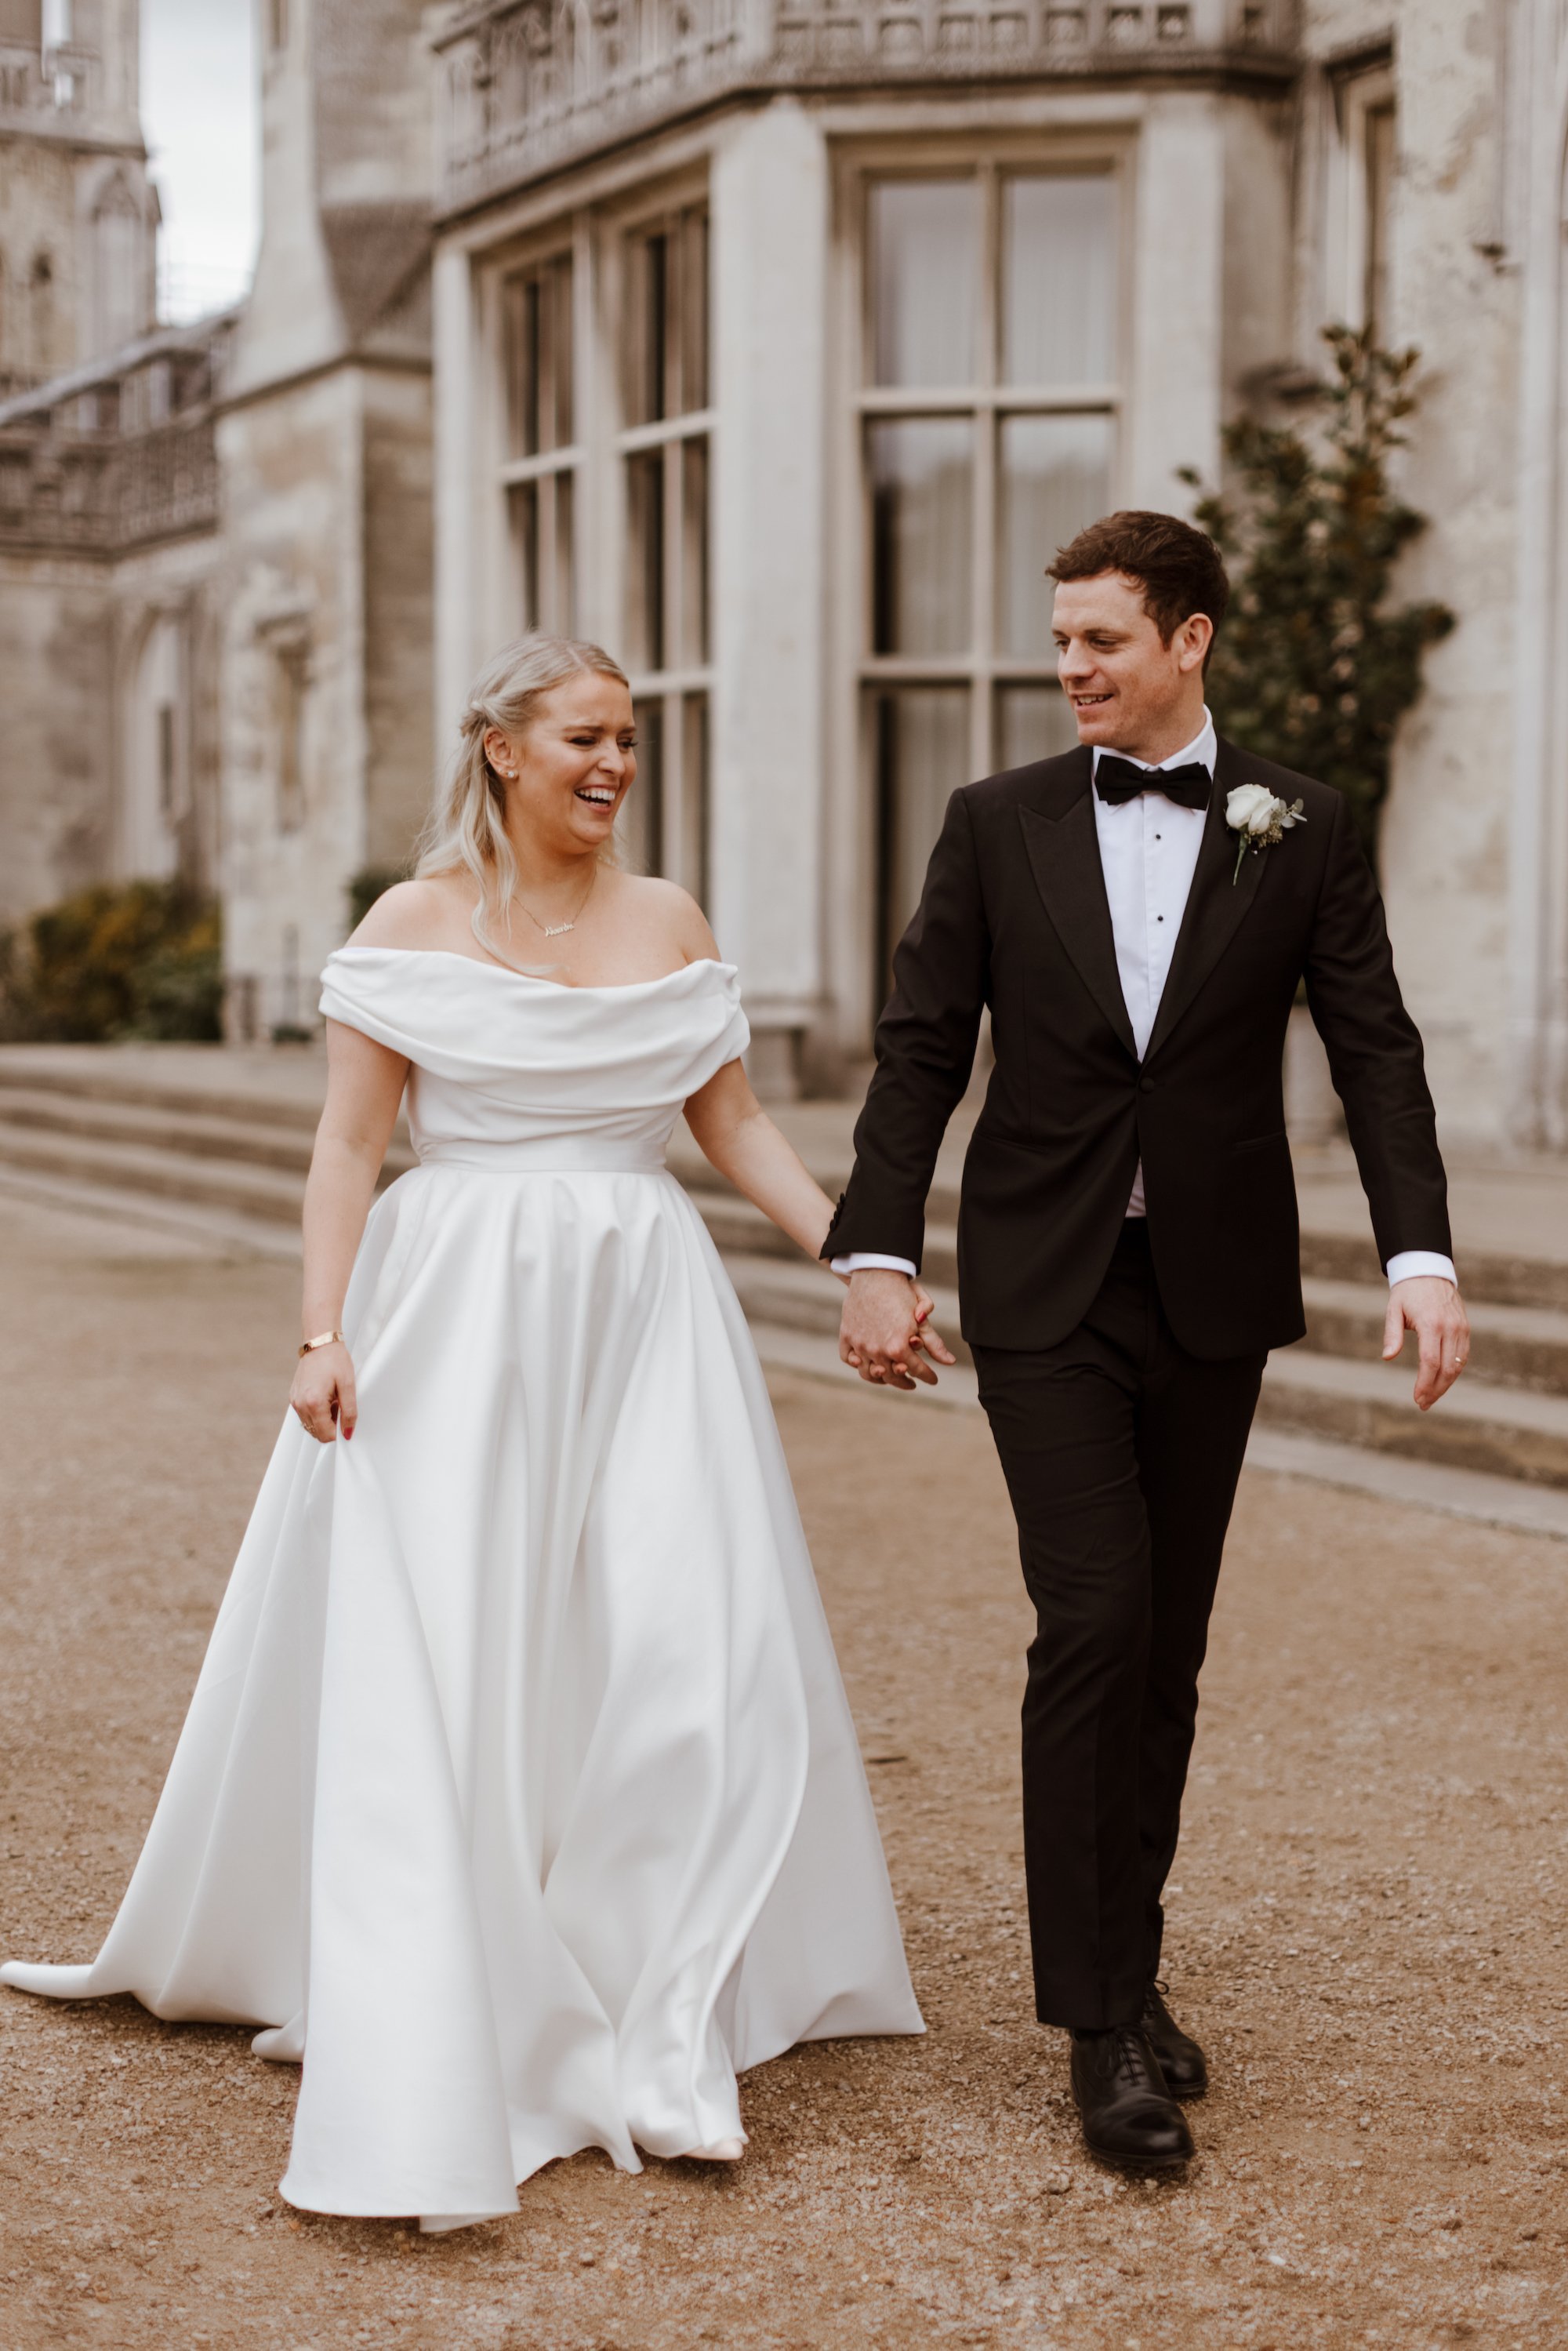 Beautiful bride Alex Light wore a wedding dress by Halfpenny London